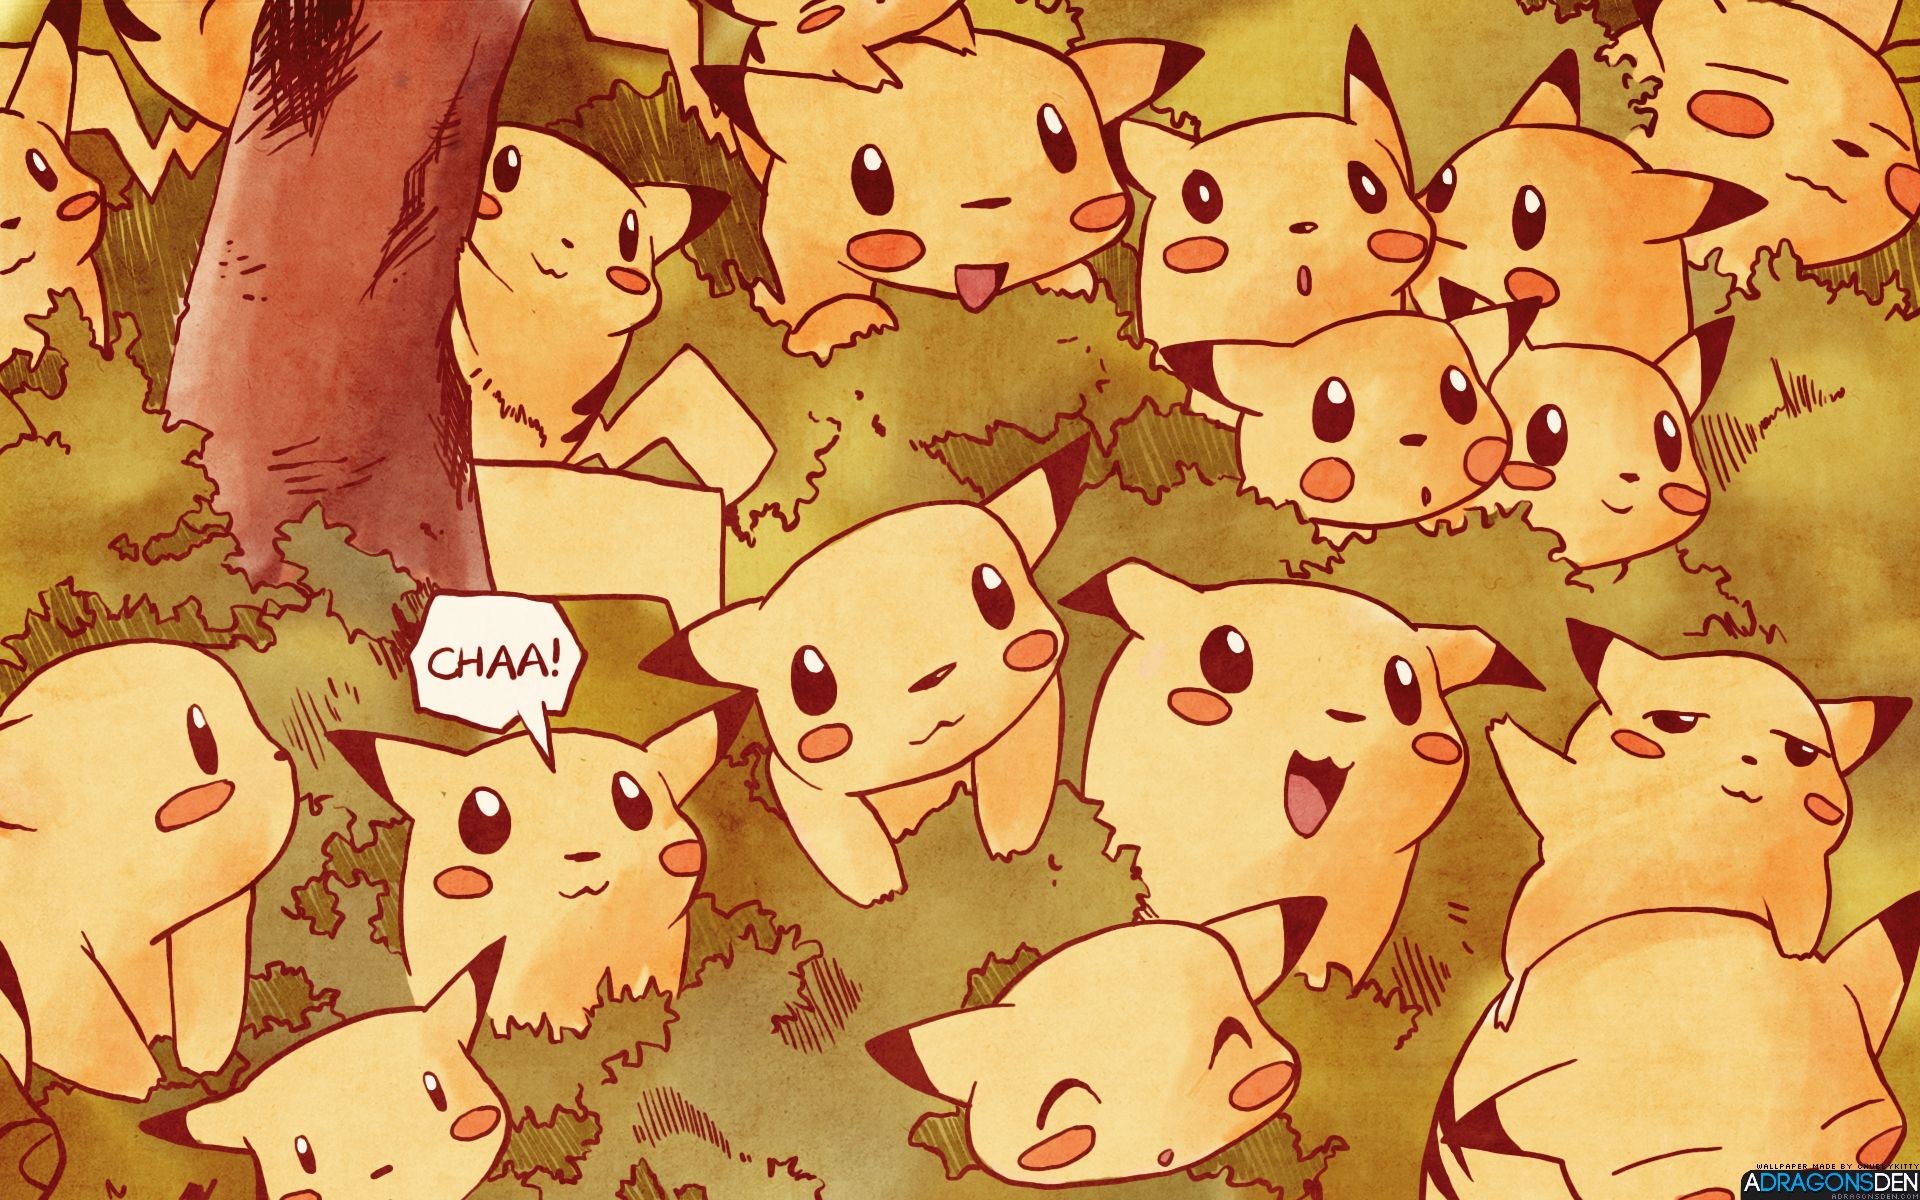 Download Pokemon Indigo League Wallpapers